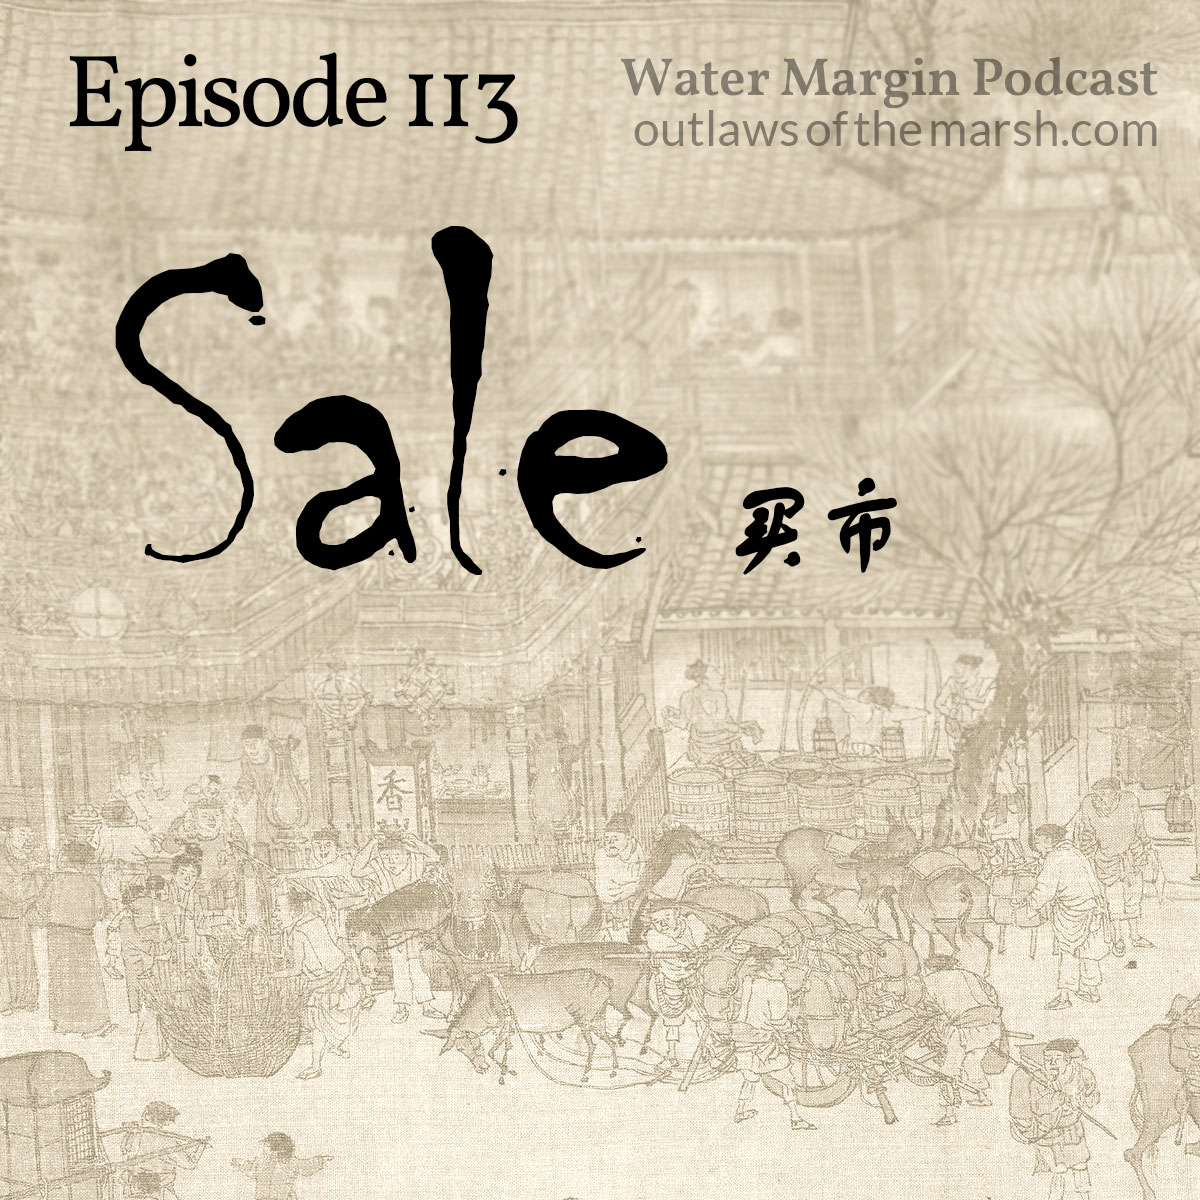 Water Margin Podcast: Episode 113